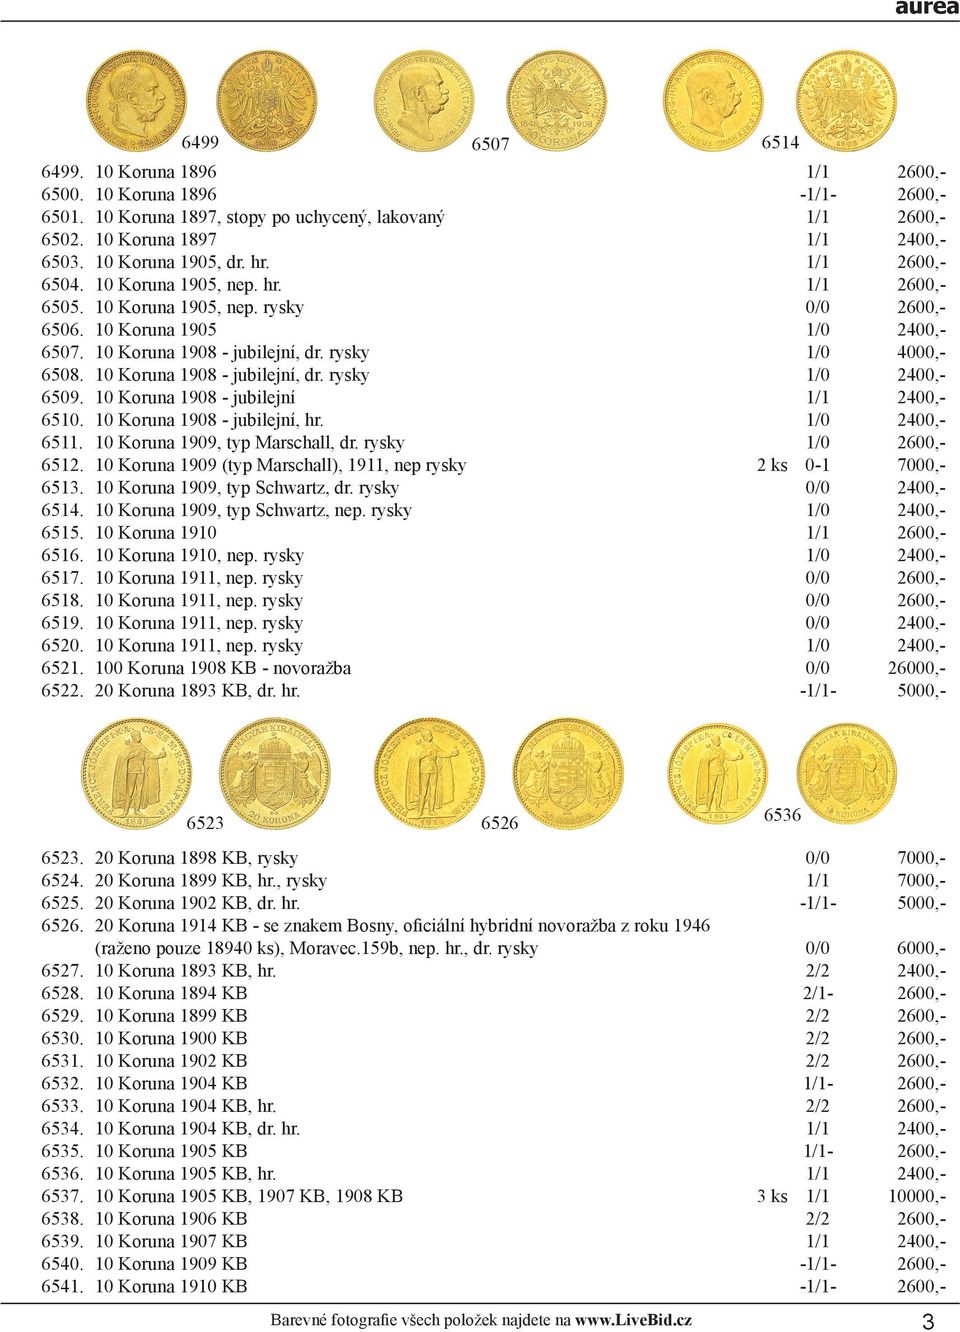 10 Koruna 1908 - jubilejní 2400,- 6510. 10 Koruna 1908 - jubilejní, hr. 1/0 2400,- 6511. 10 Koruna 1909, typ Marschall, dr. rysky 1/0 2600,- 6512.